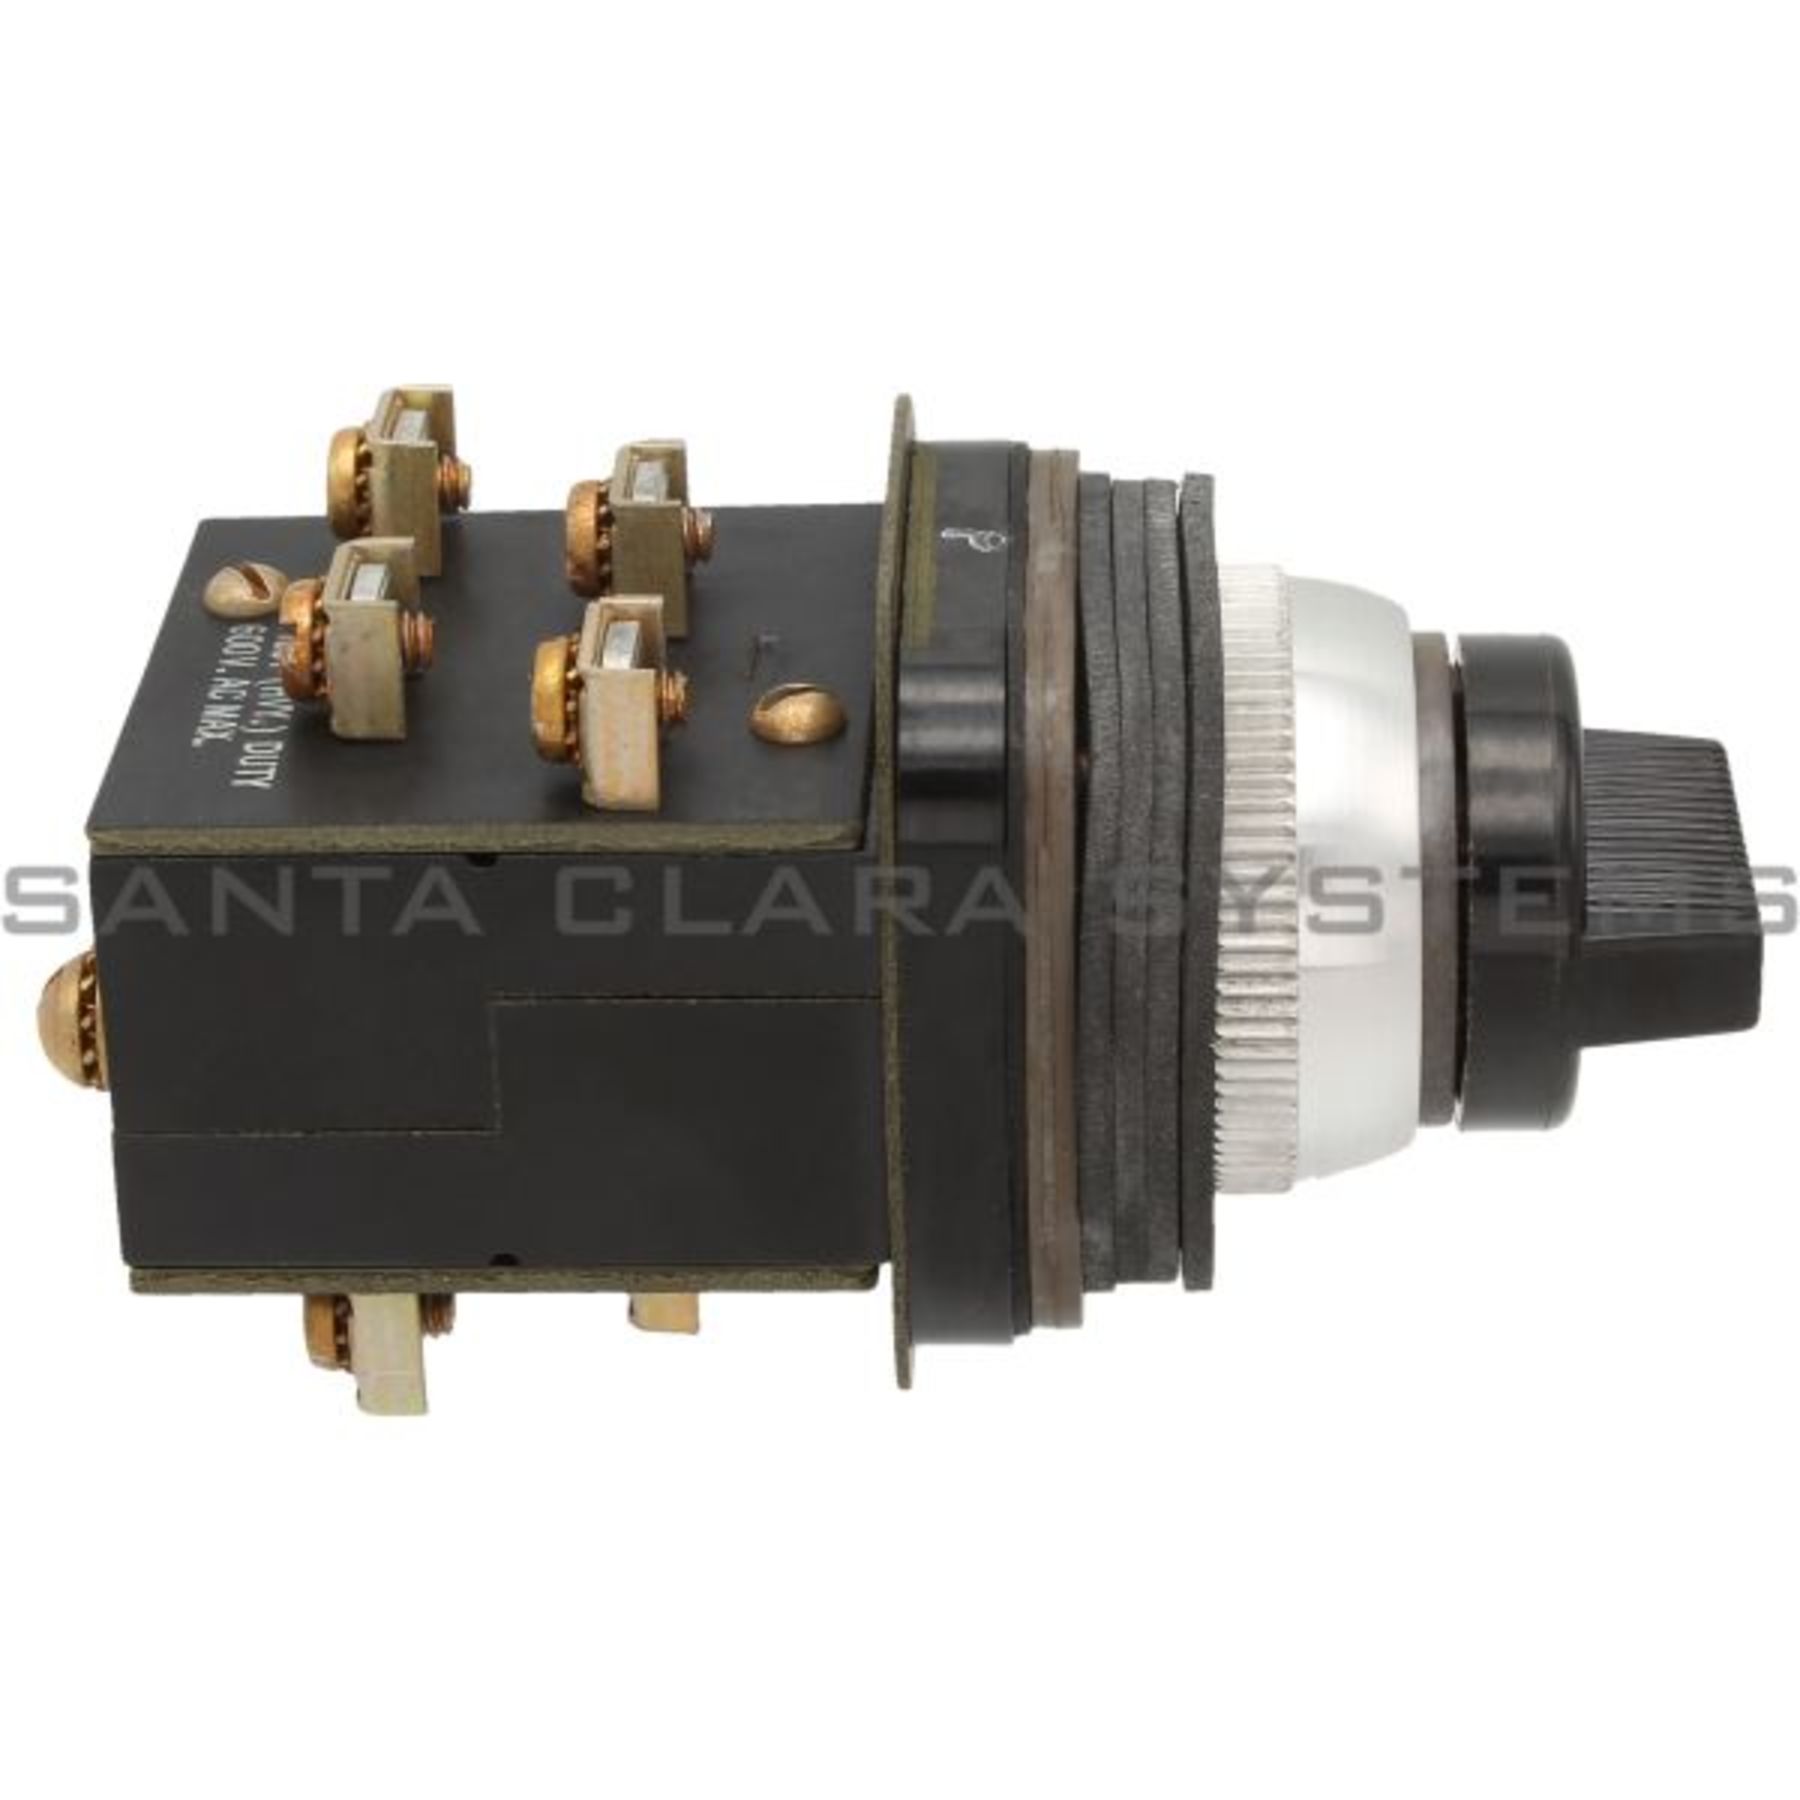 800T-J2B3 Allen Bradley Selector Switch - Santa Clara Systems